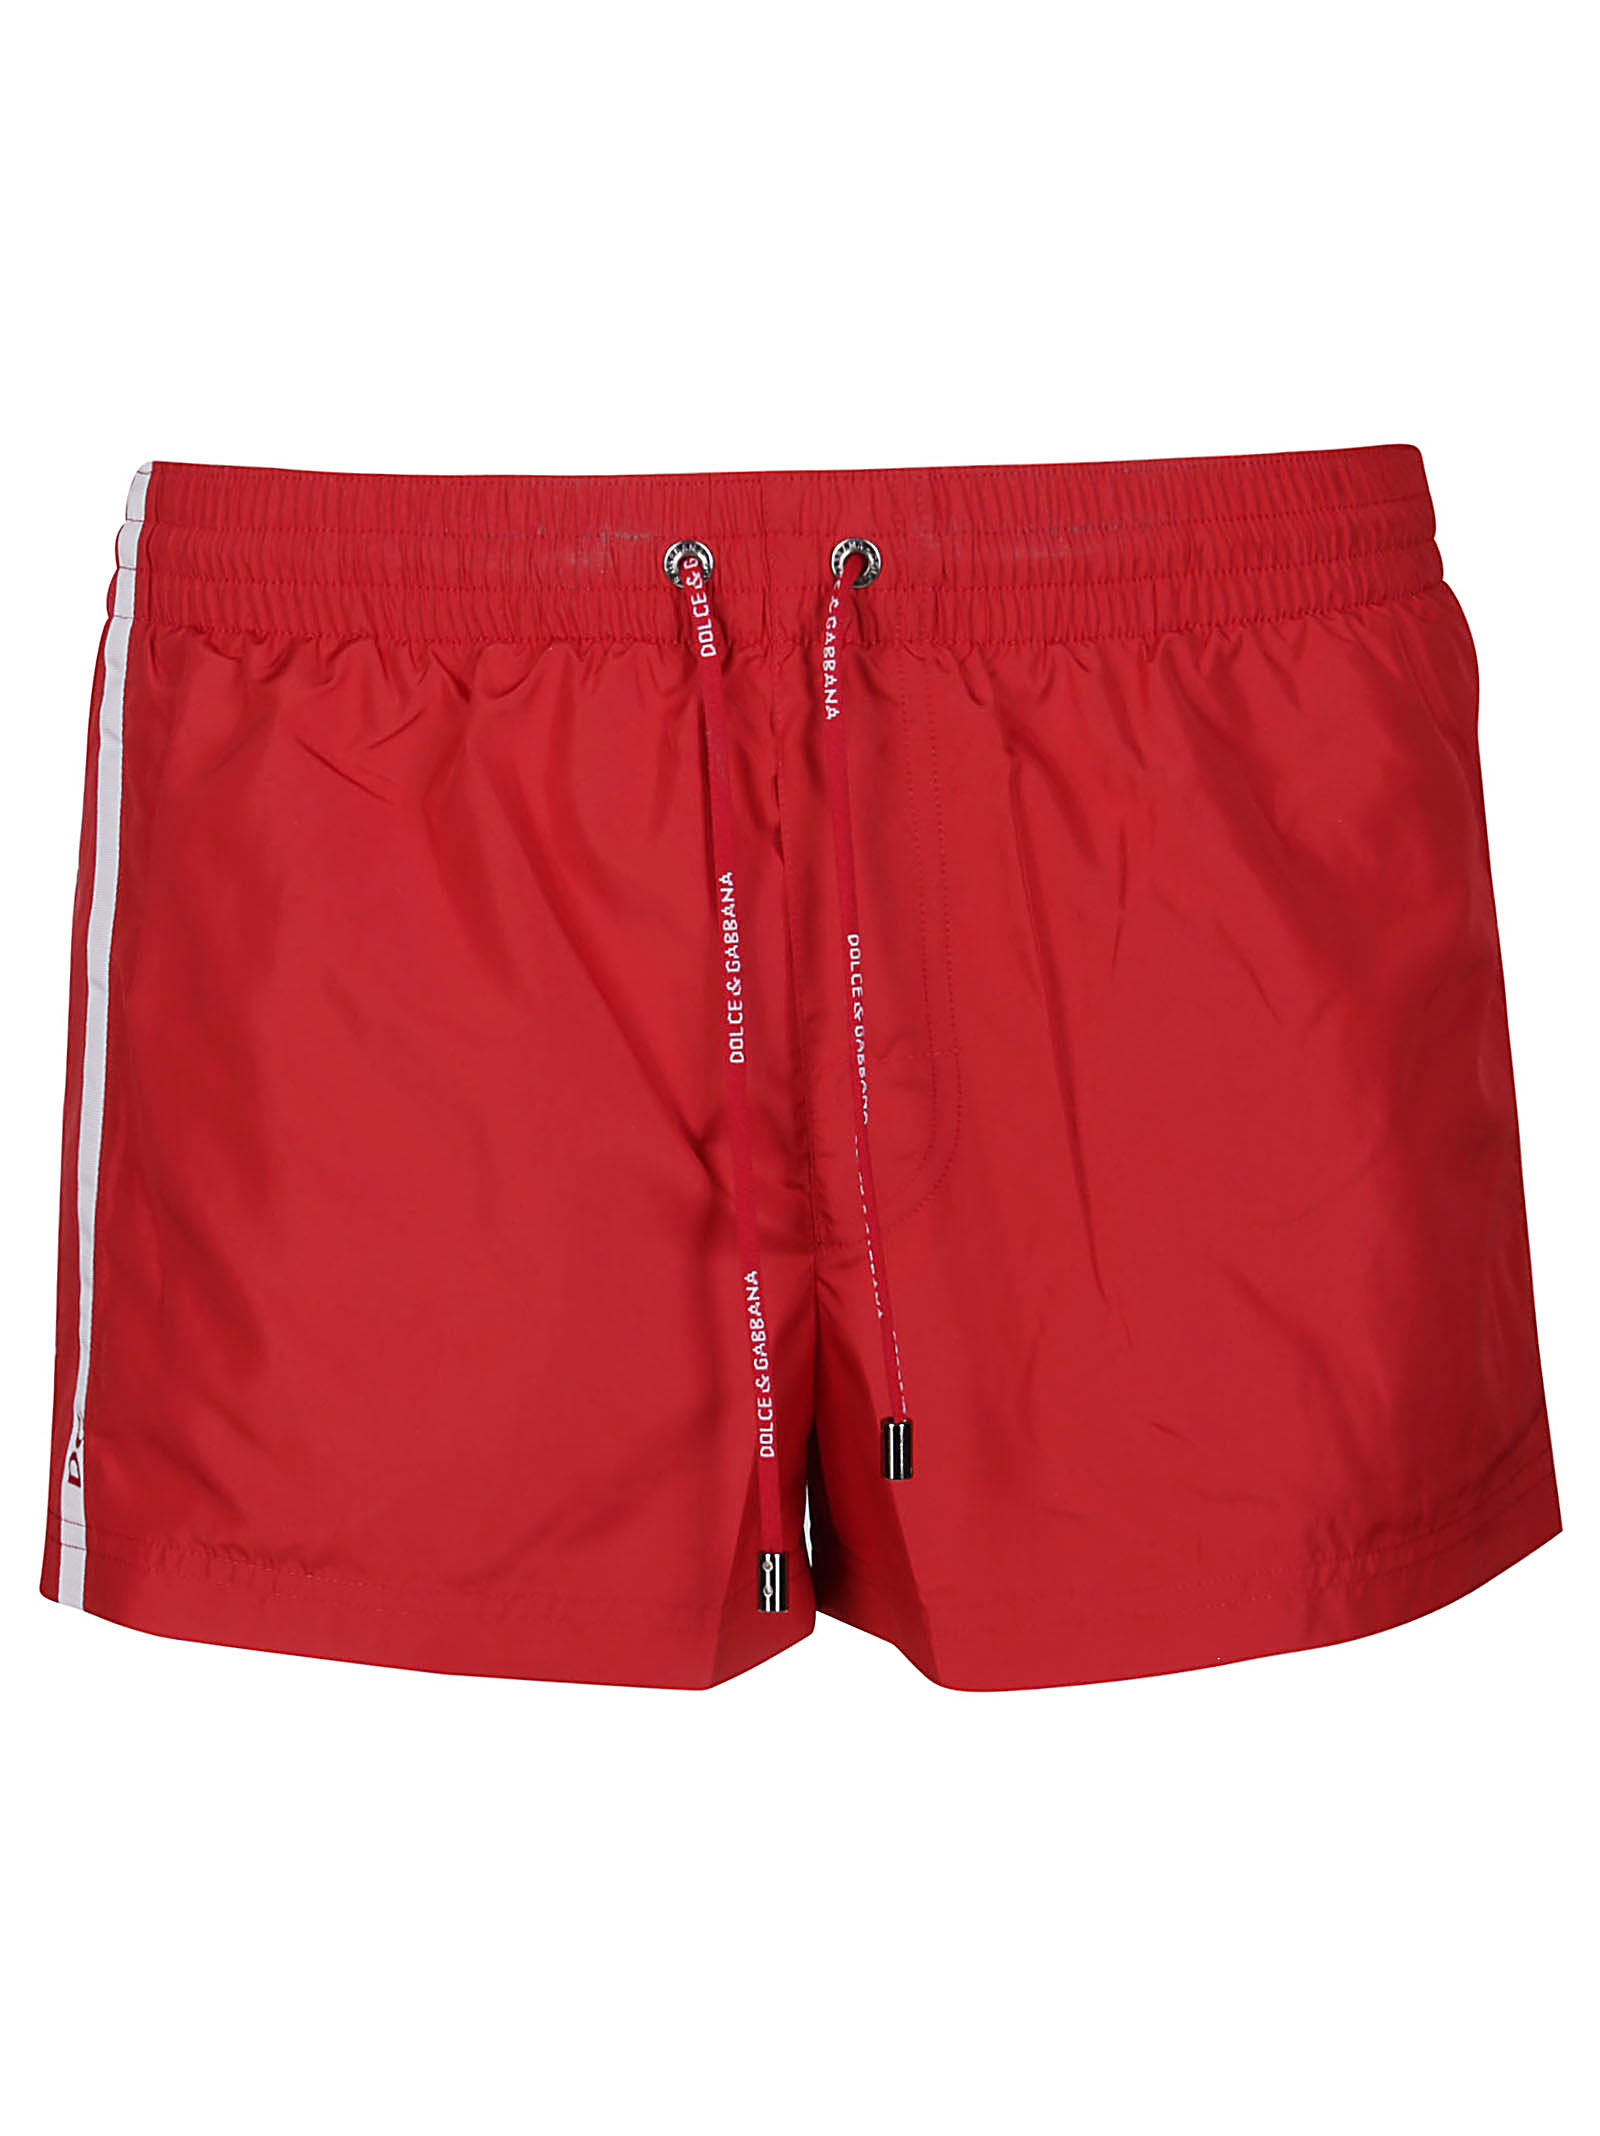 Dolce & Gabbana Red Swimming Shorts